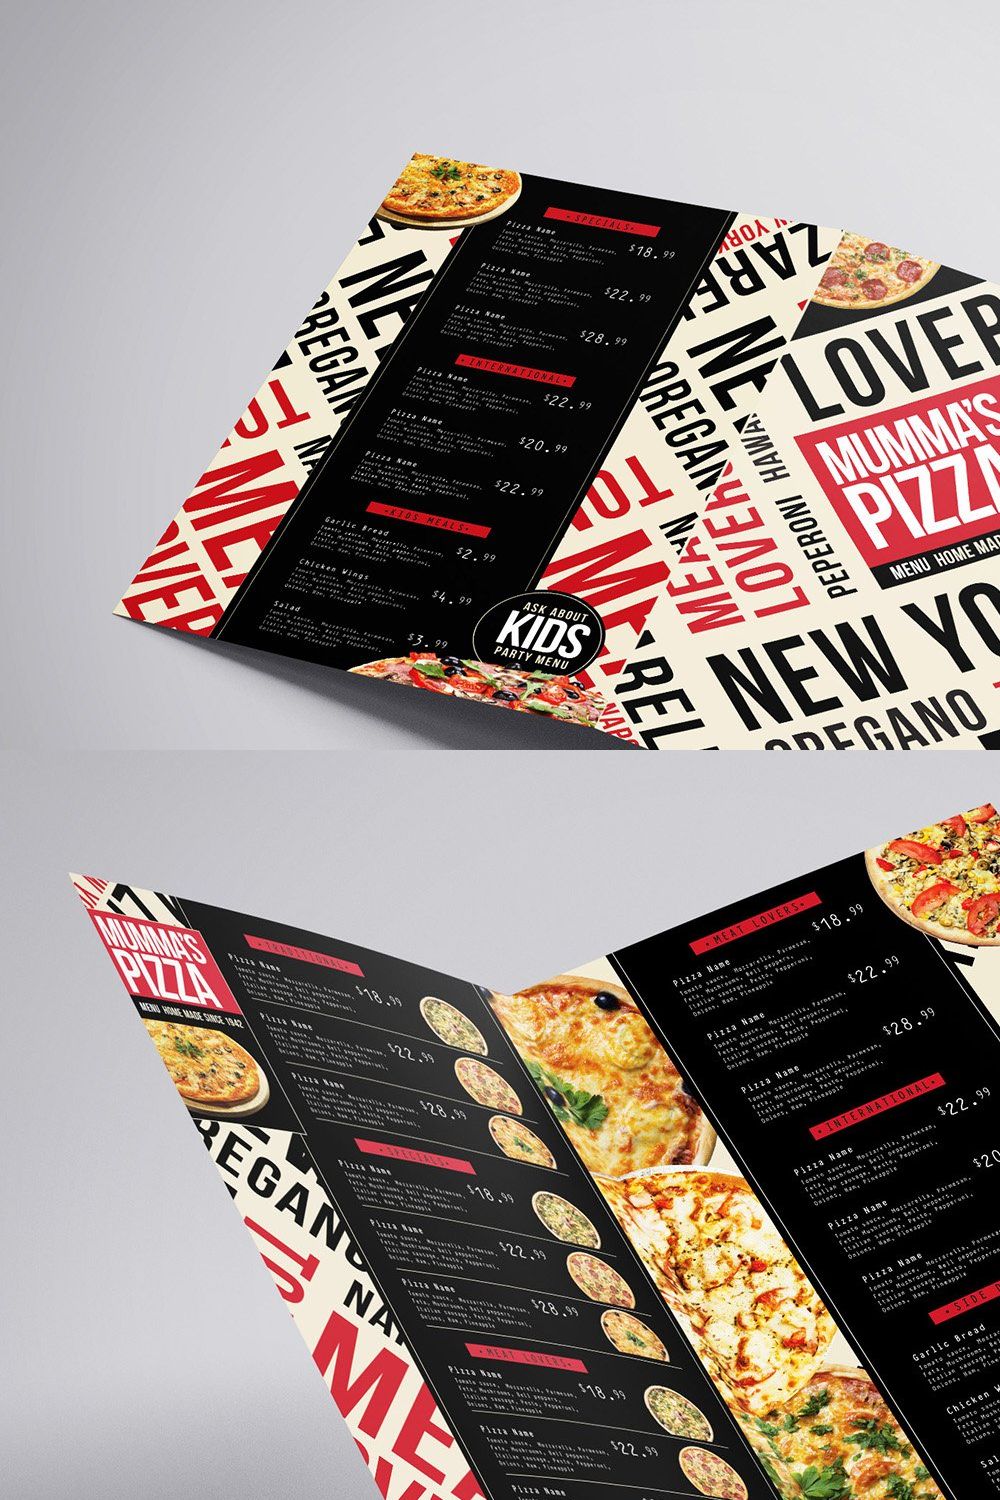 Folding A3 Pizza Menu Template pinterest preview image.